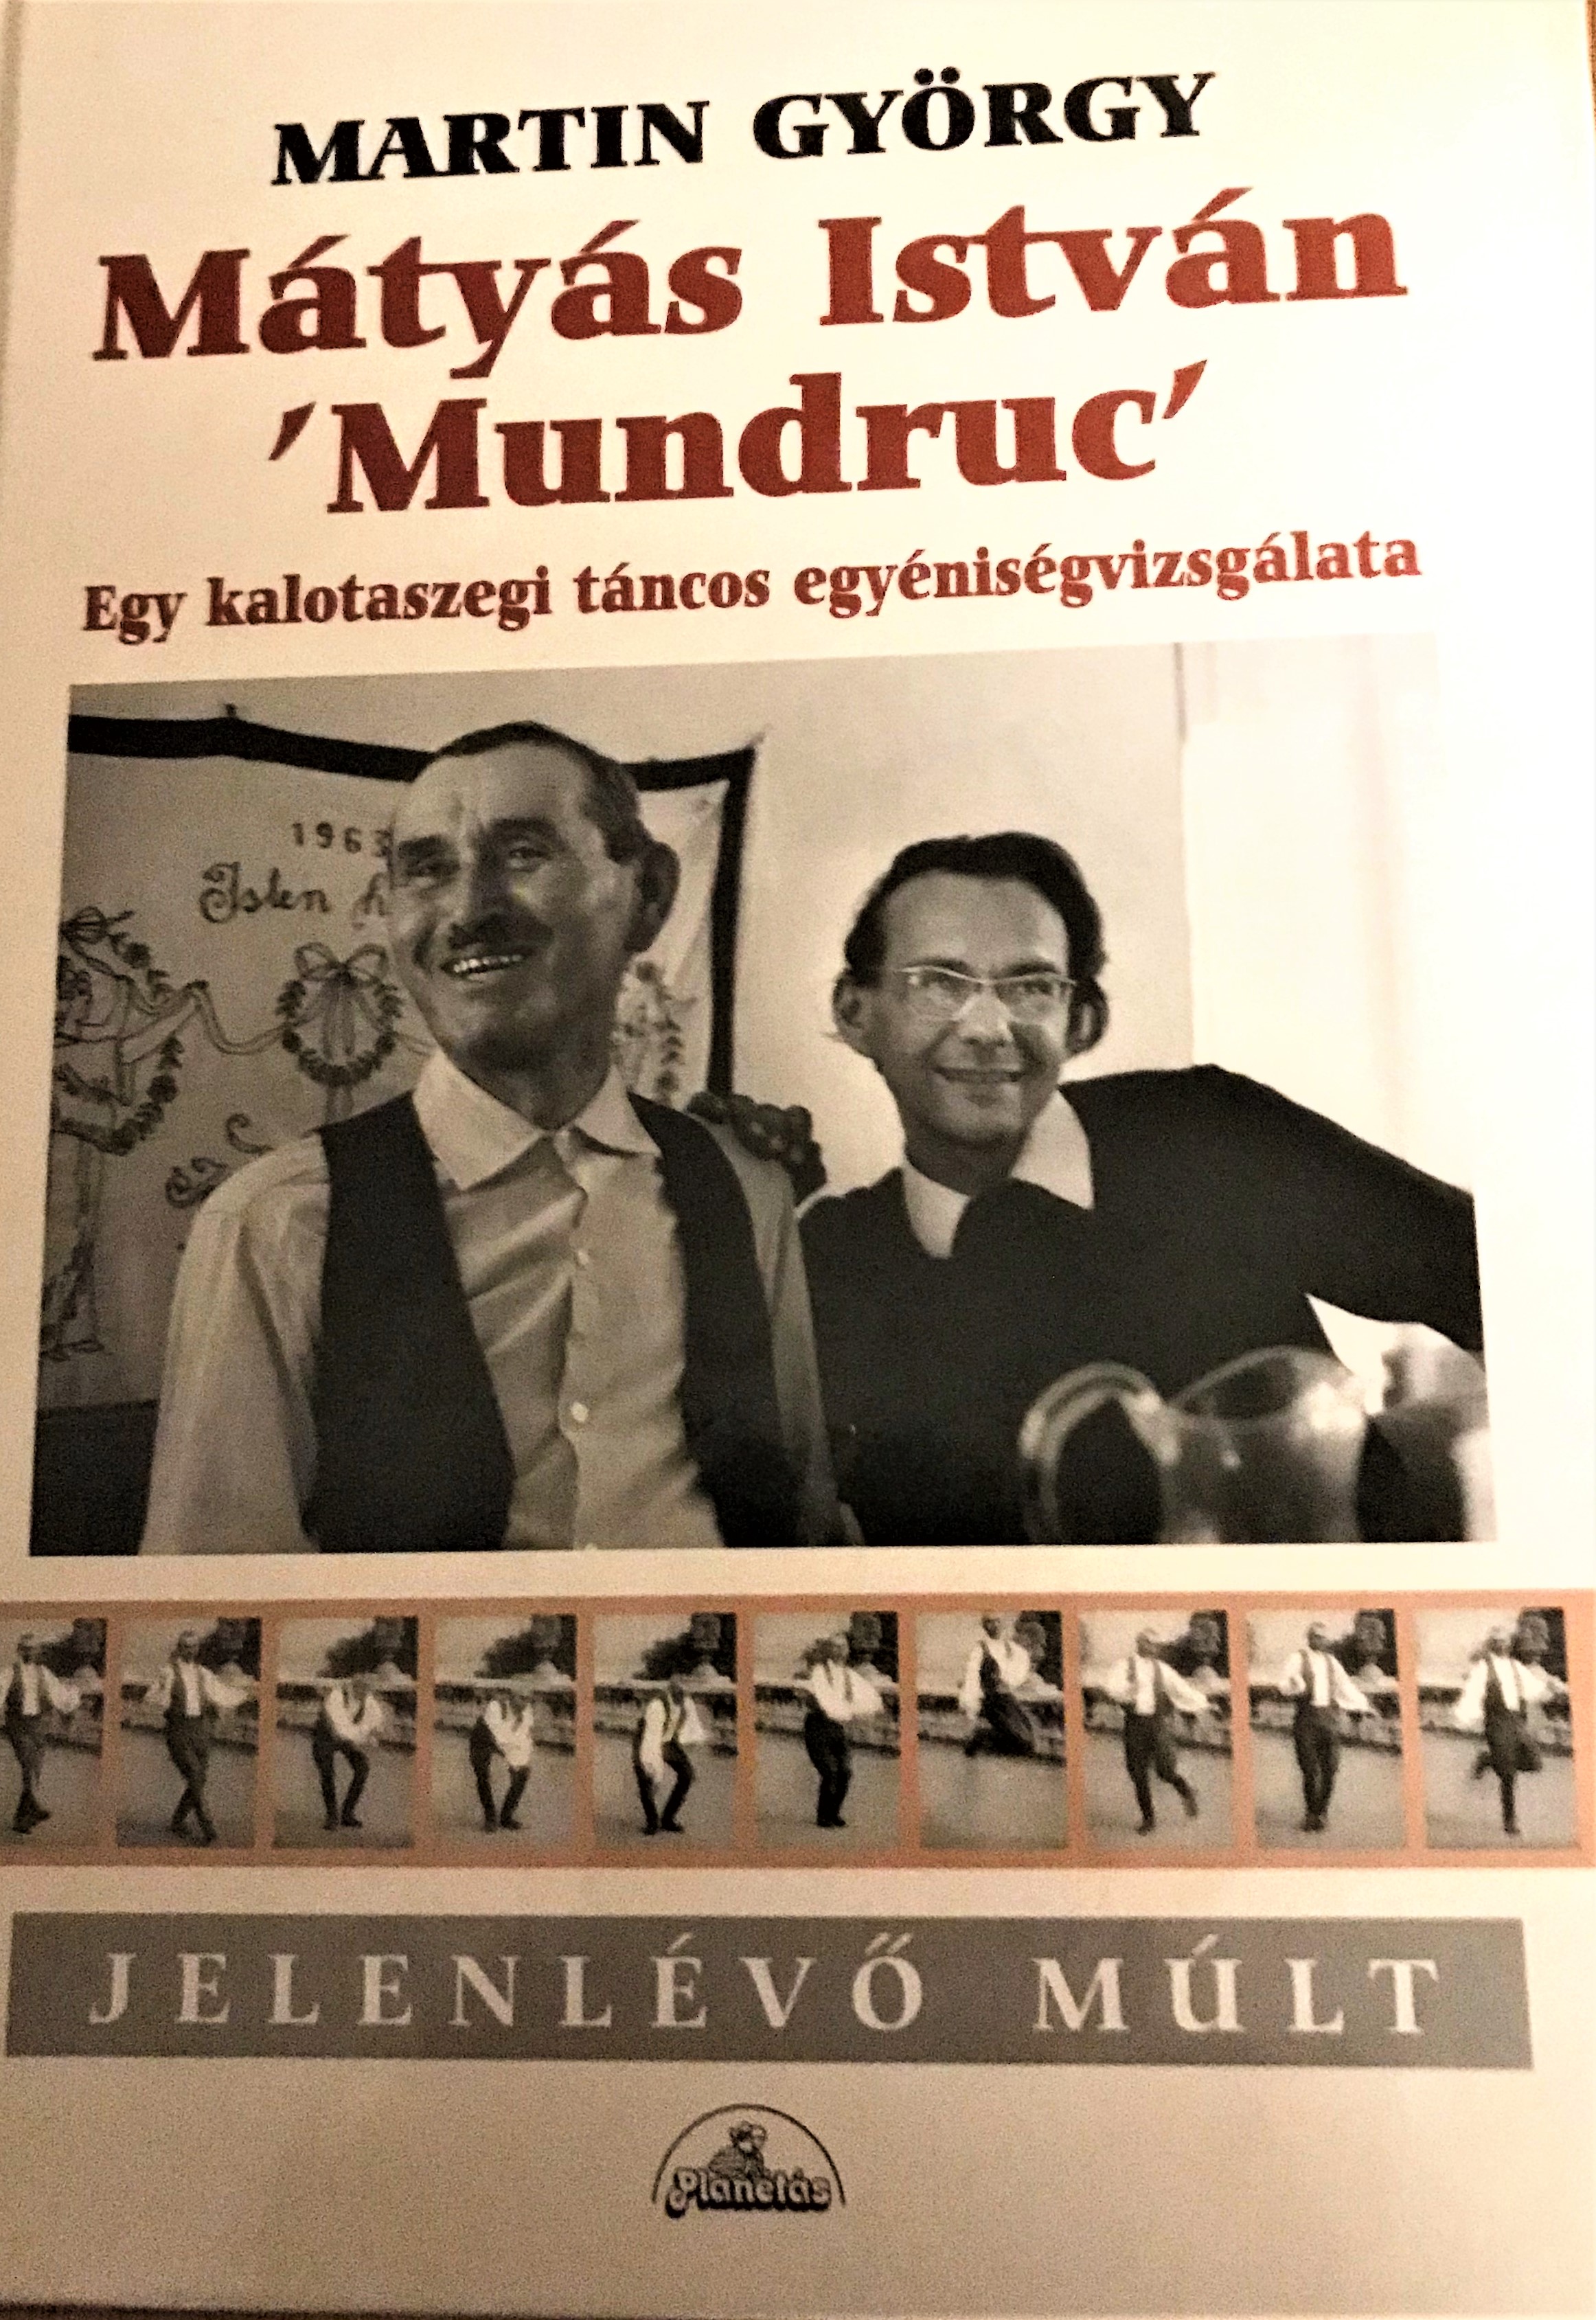 Hungarian Performing Arts program booklet cover